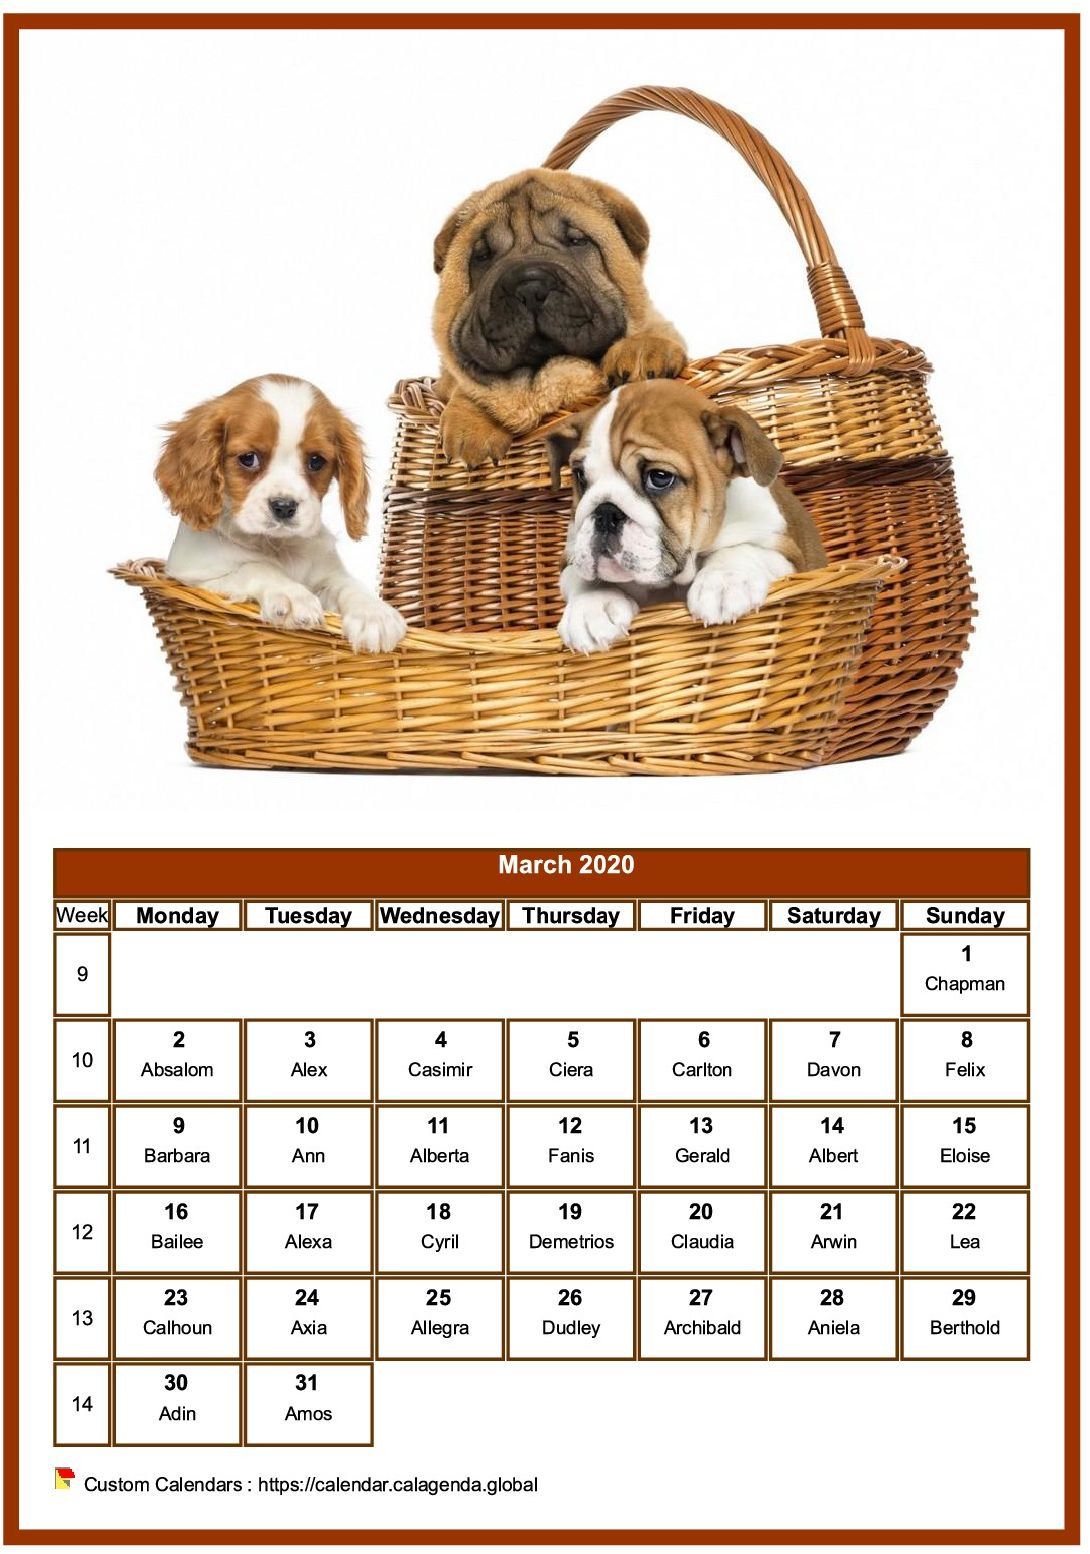 Calendar March 2020 dogs